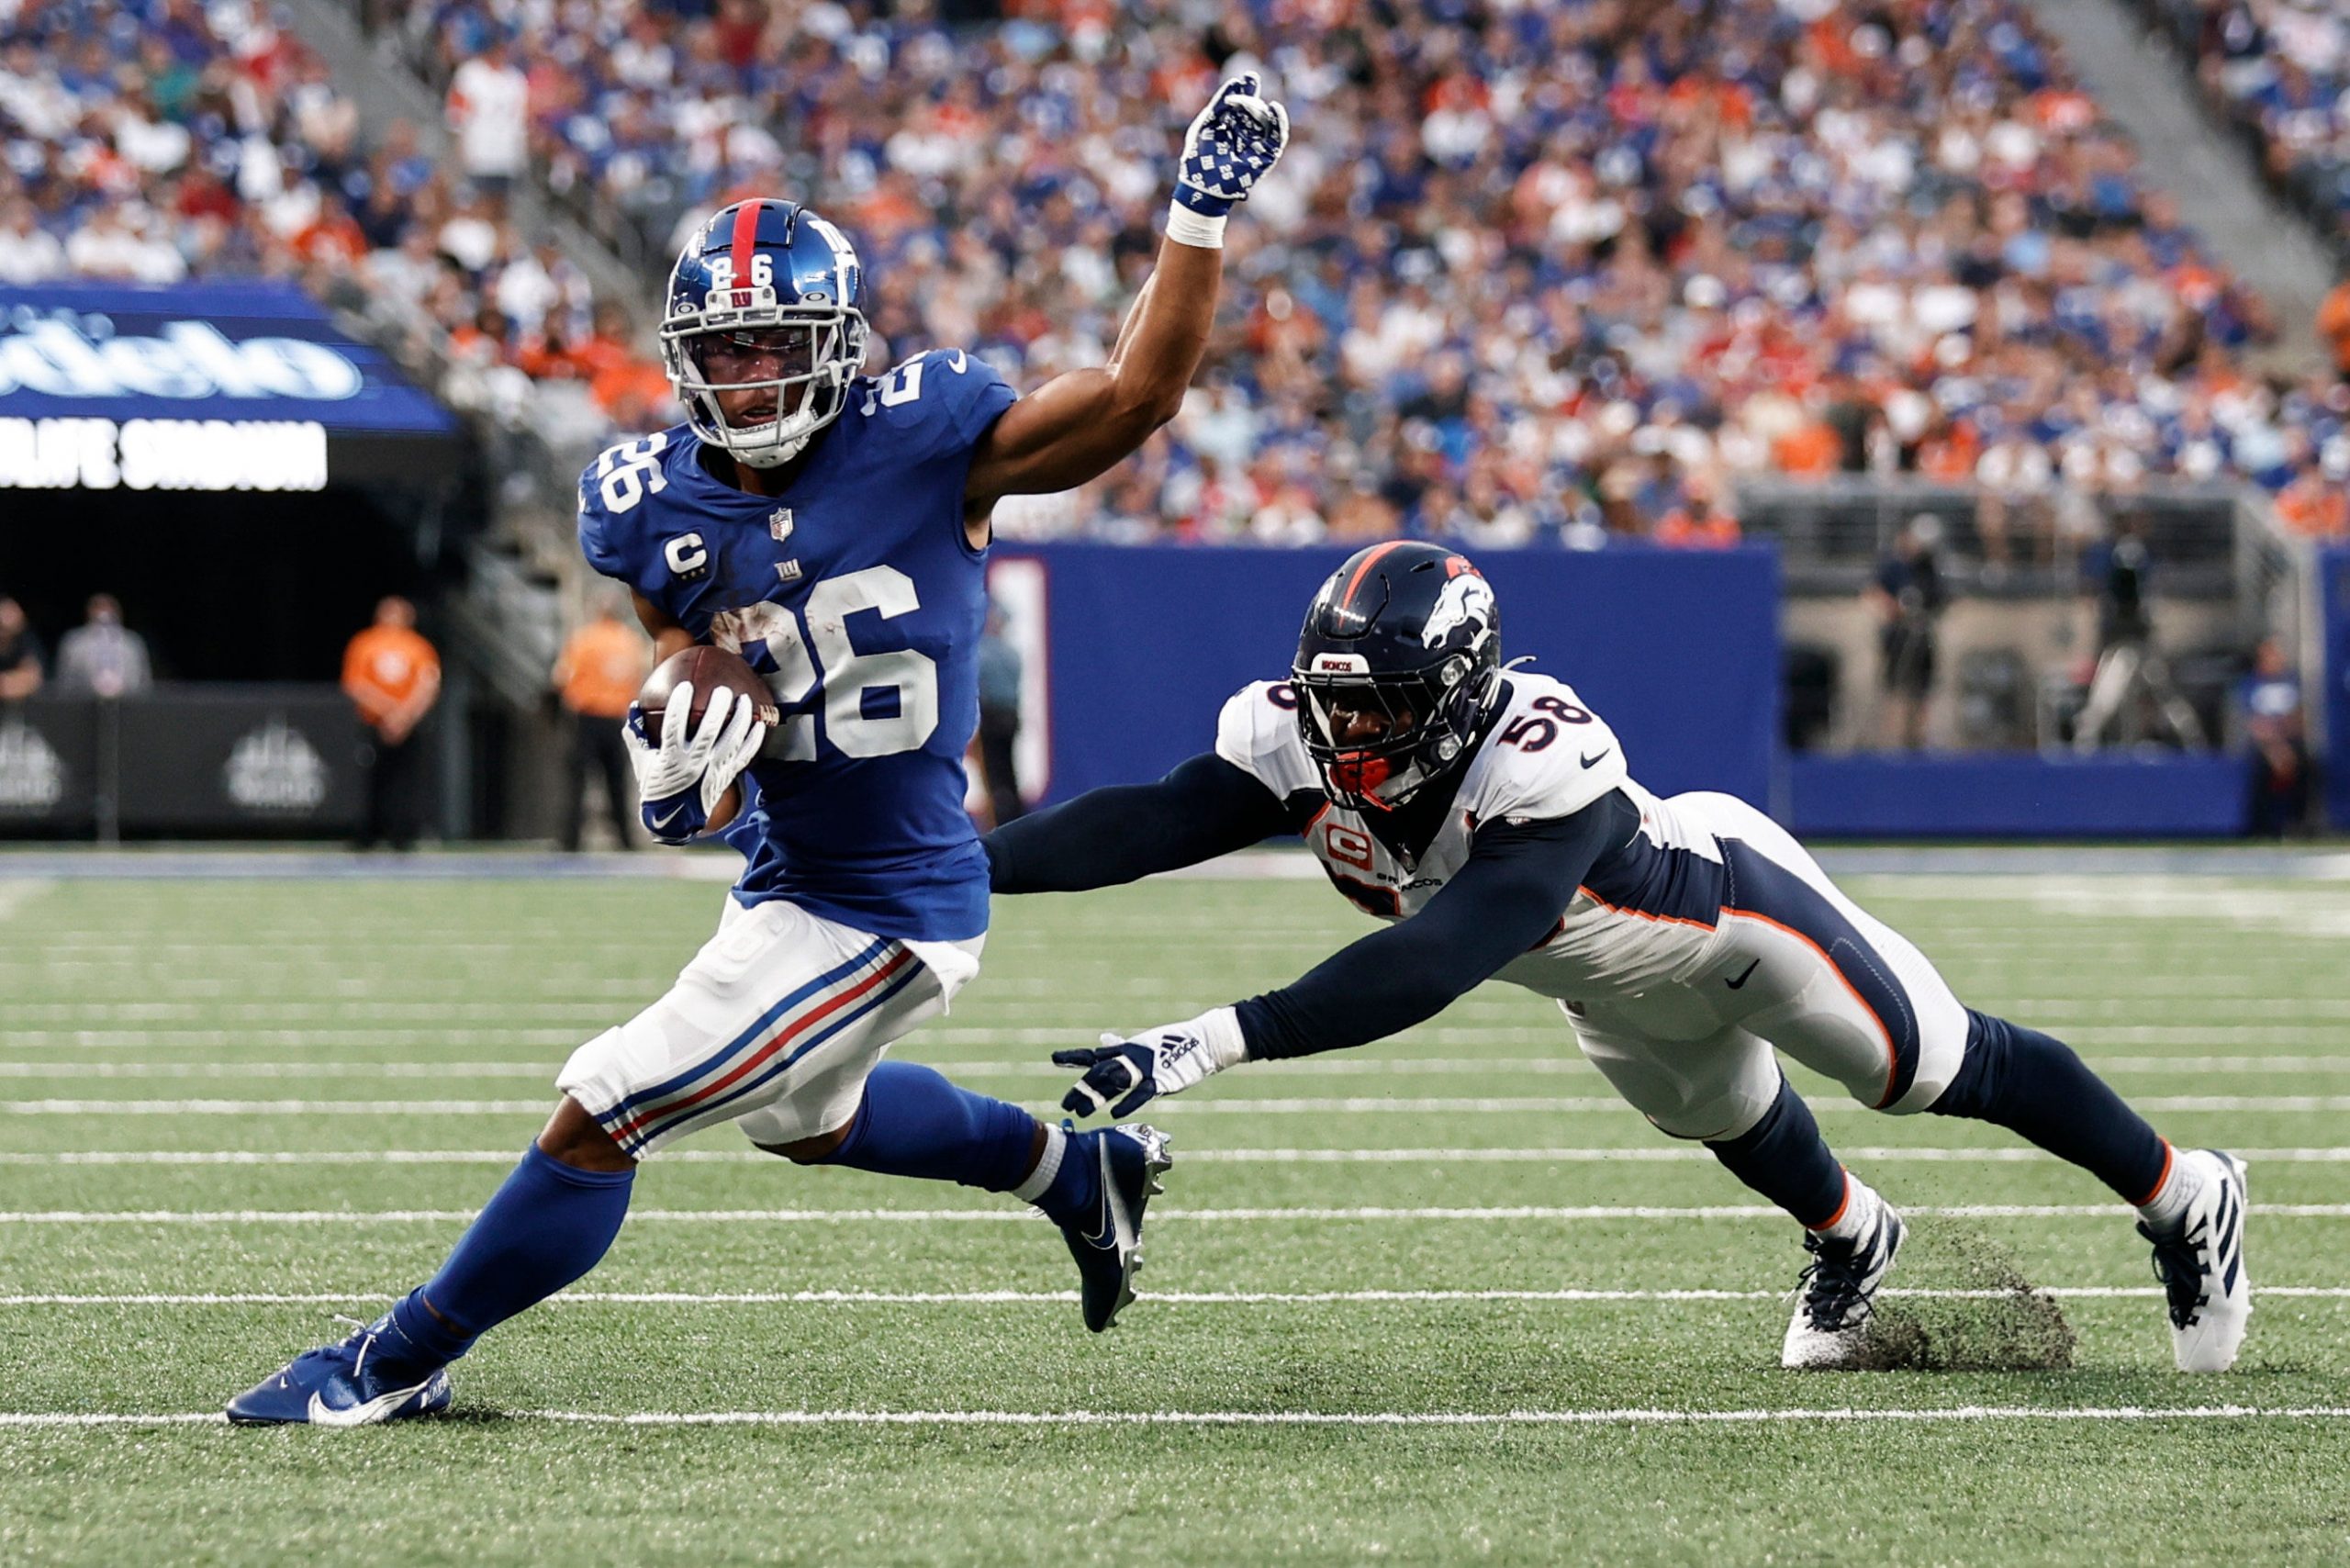 NFL: Giants RB Saquon Barkley active for game against Washington Football Team